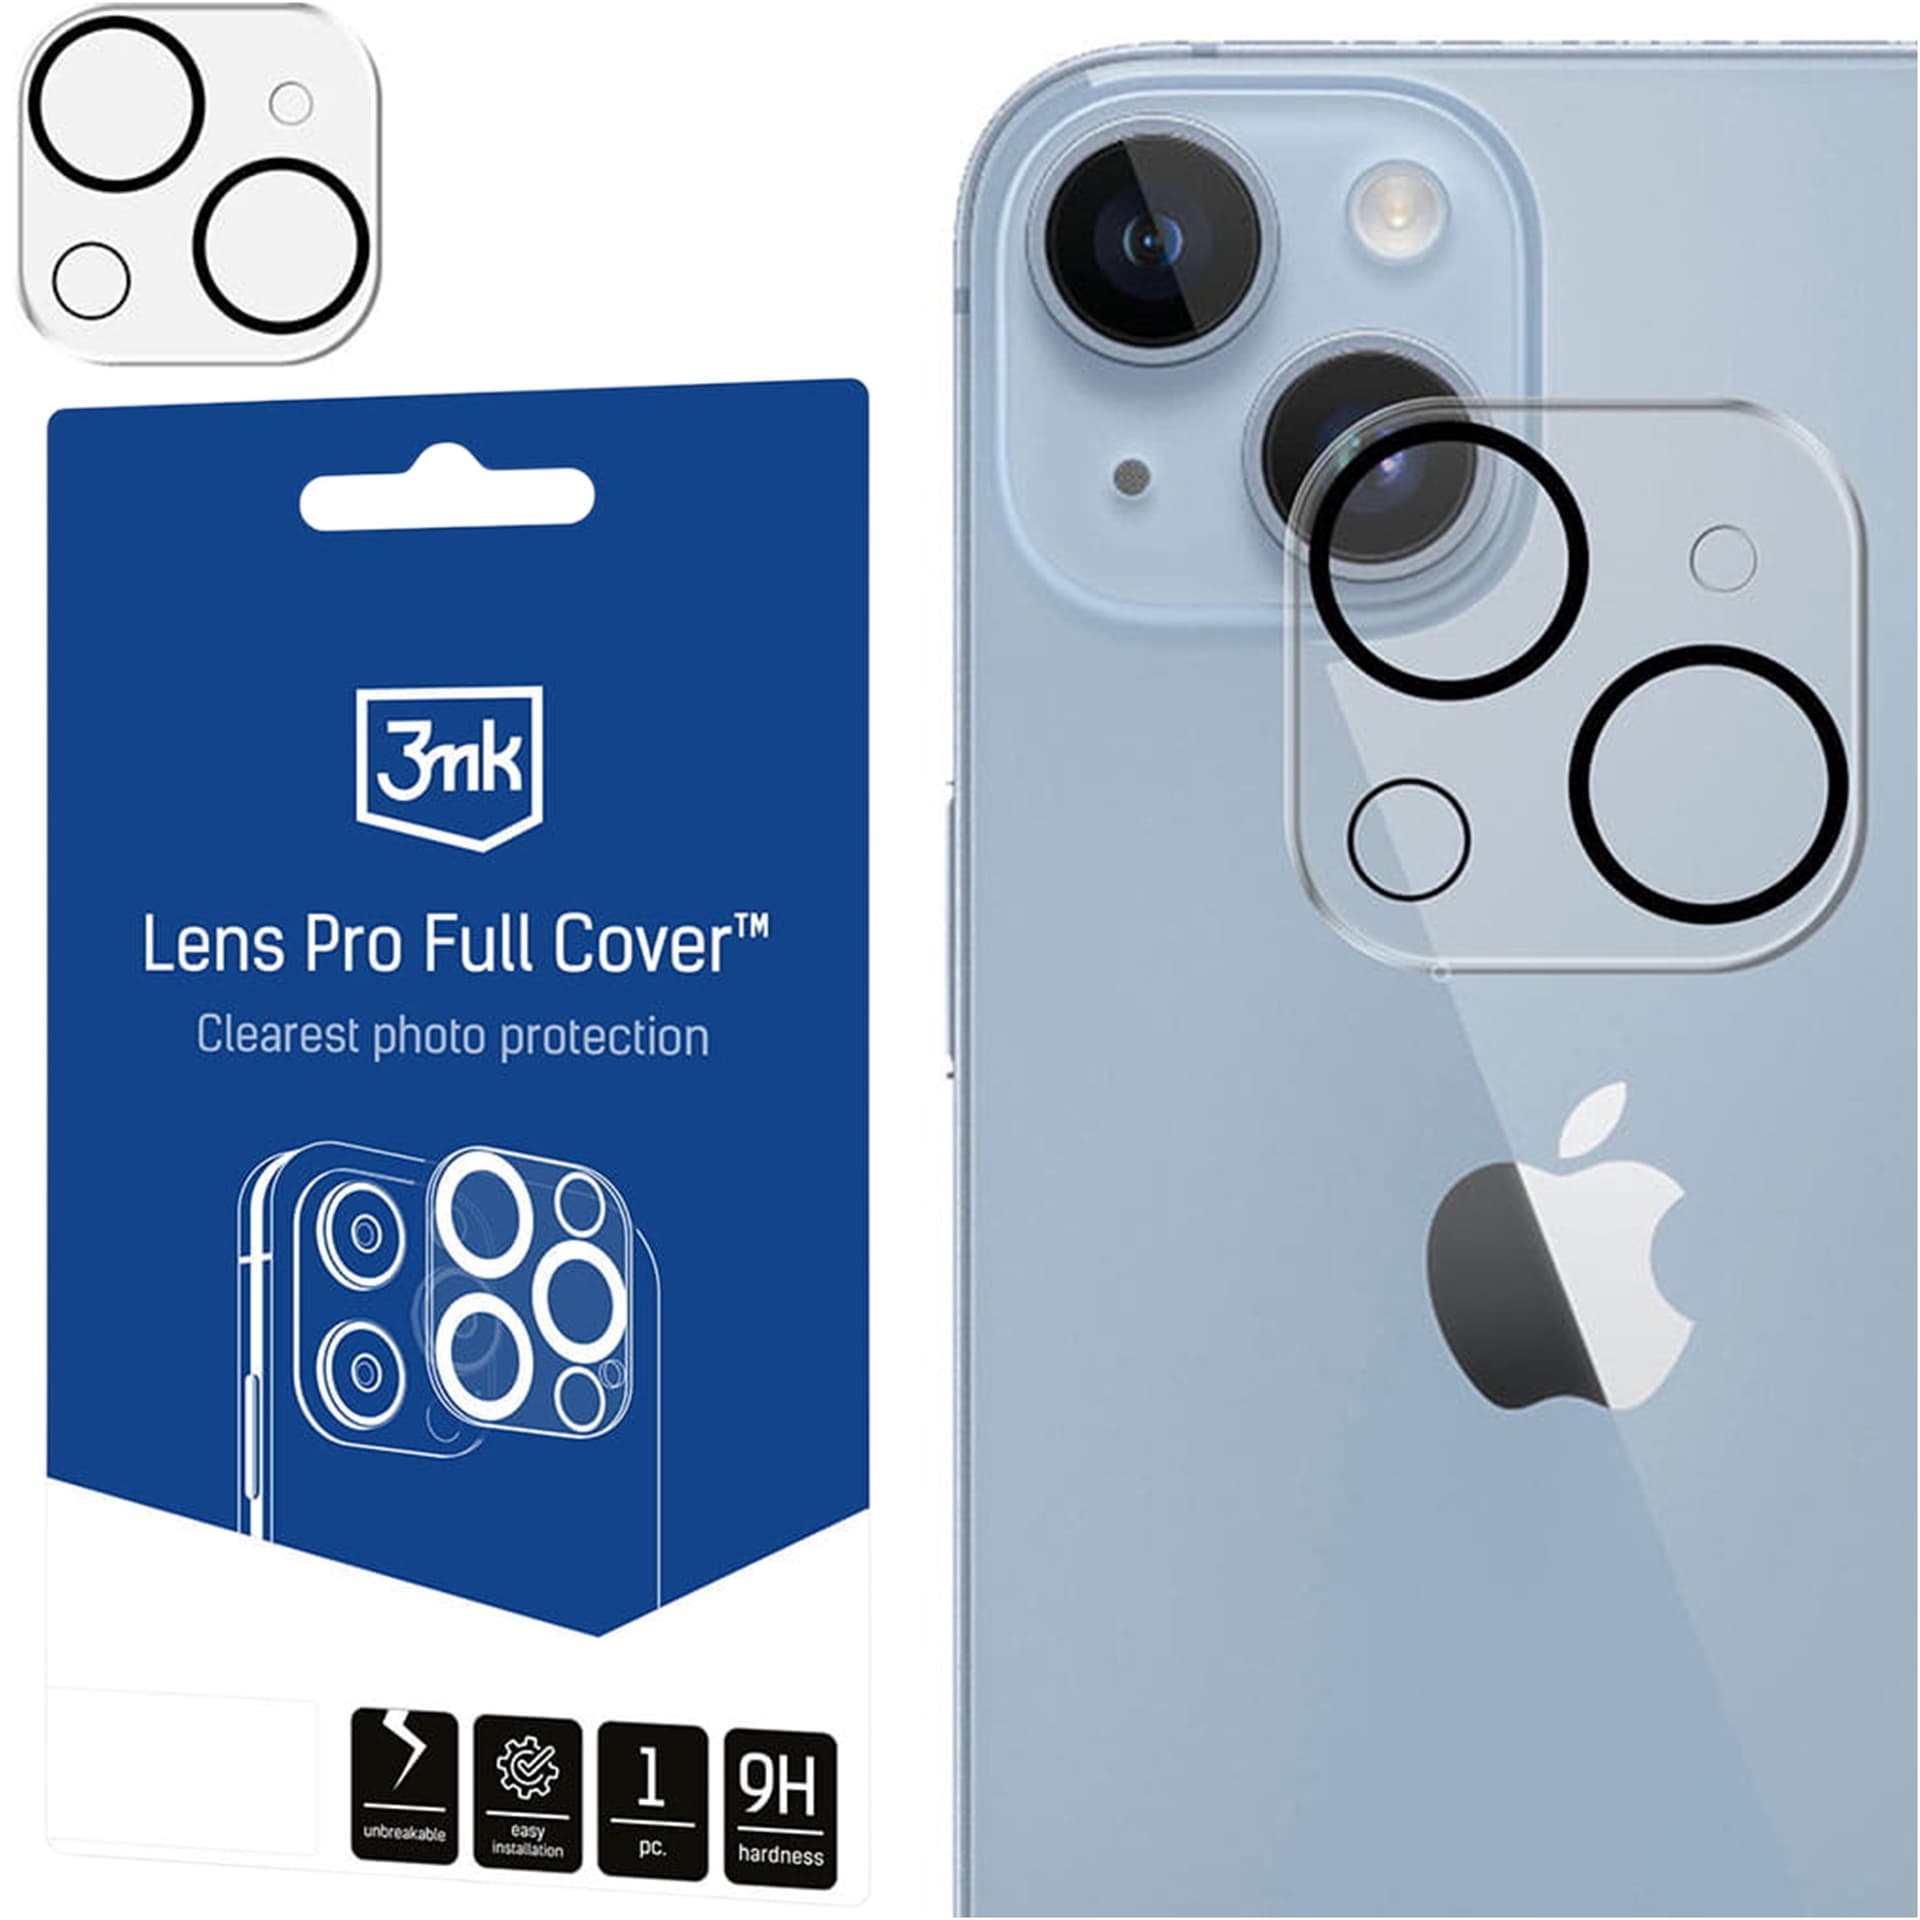 Szkło do iPhone 13 / 13 Mini osłona na aparat obiektyw 3mk Lens Pro Full Cover nakładka ochronna